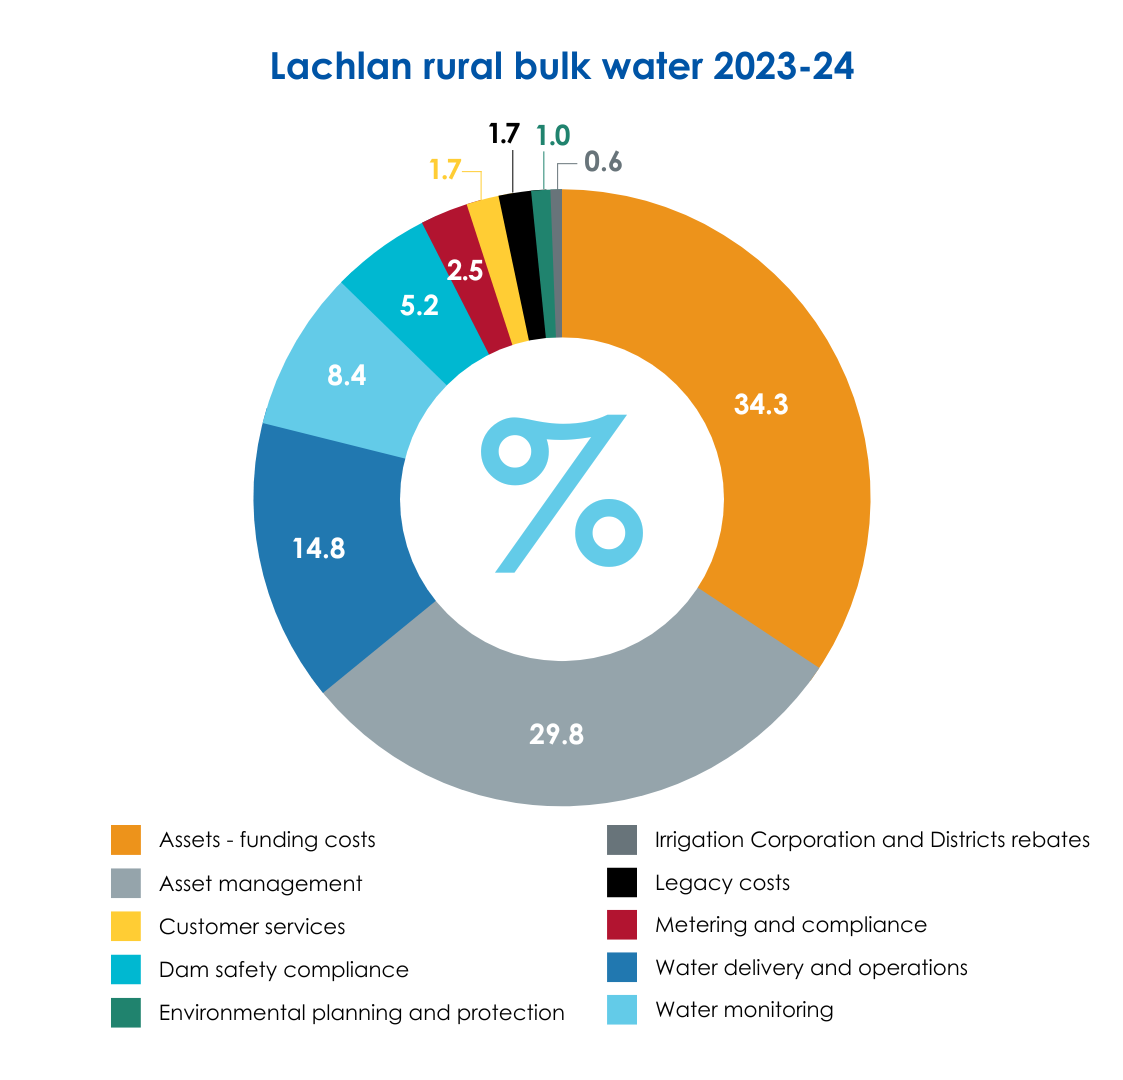 Lachlan rural bulk water 2023-24